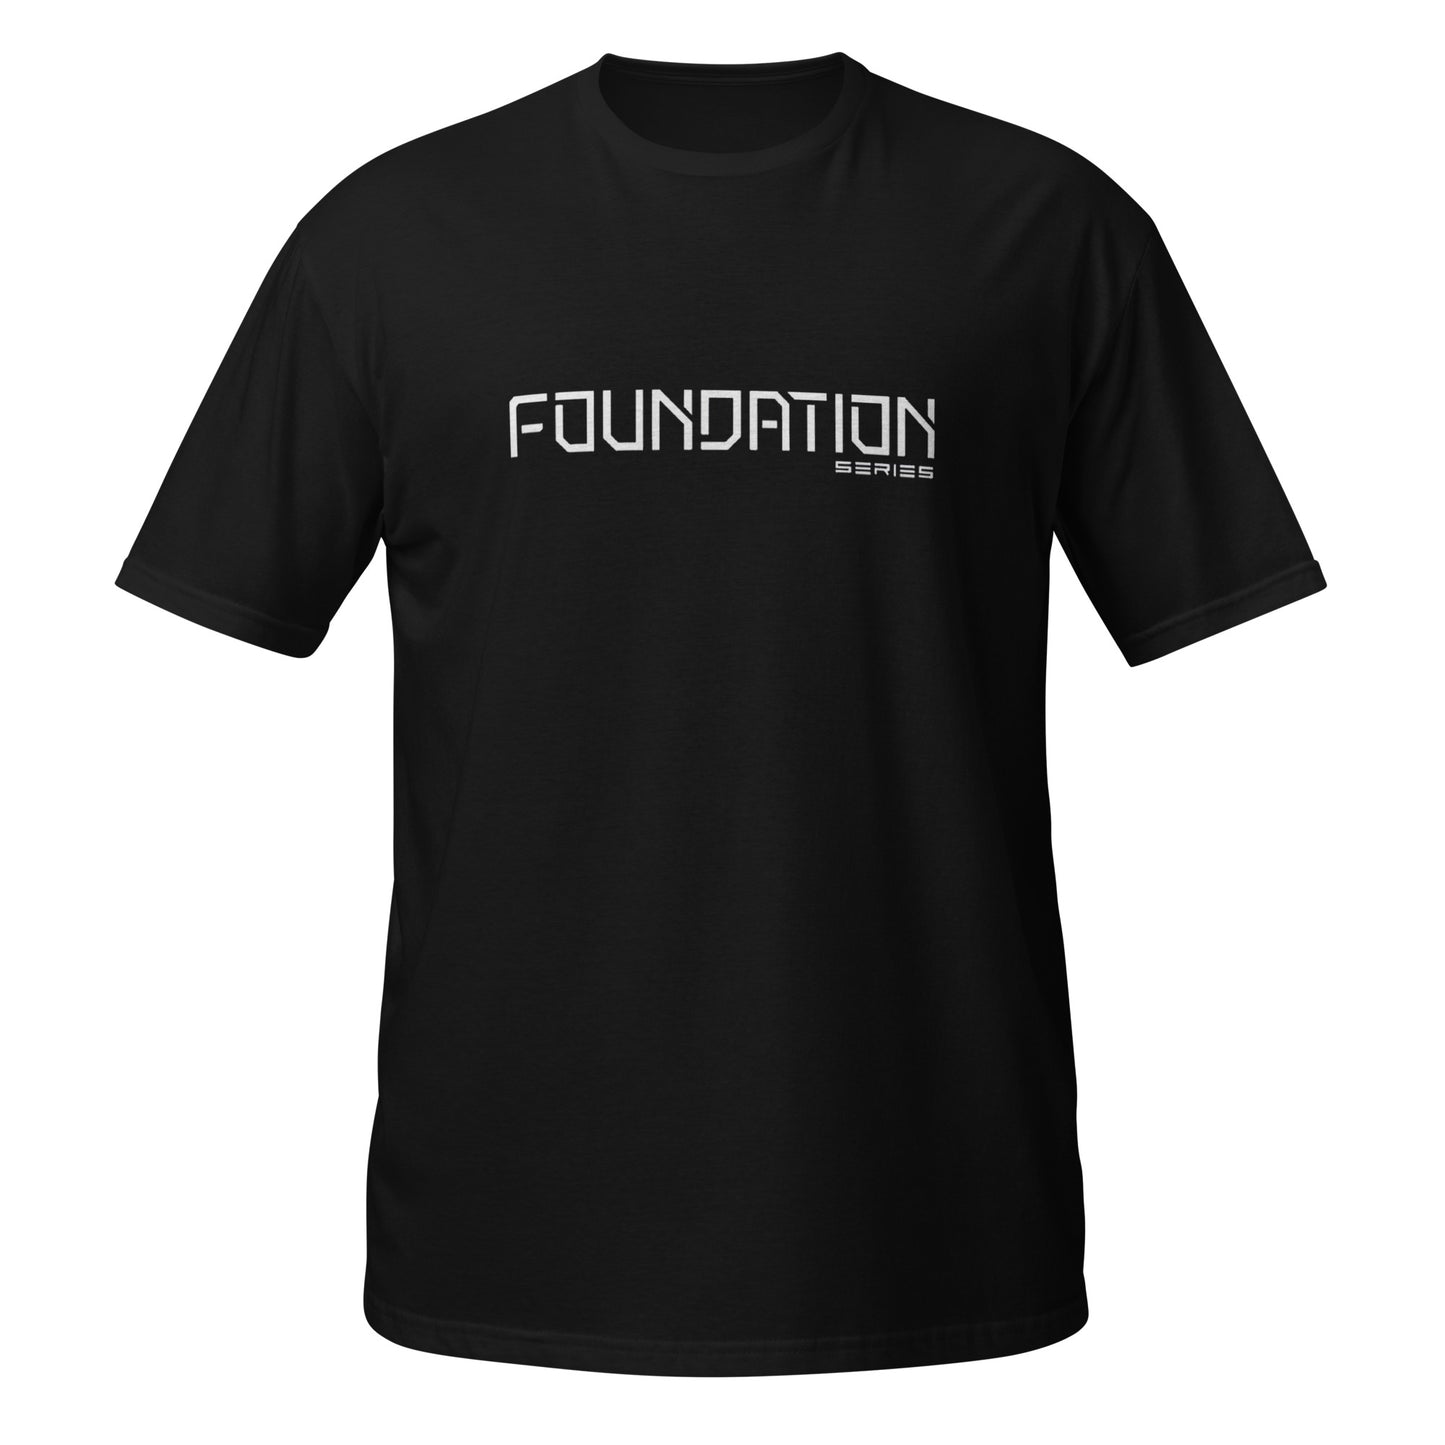 Foundation Series T-Shirt